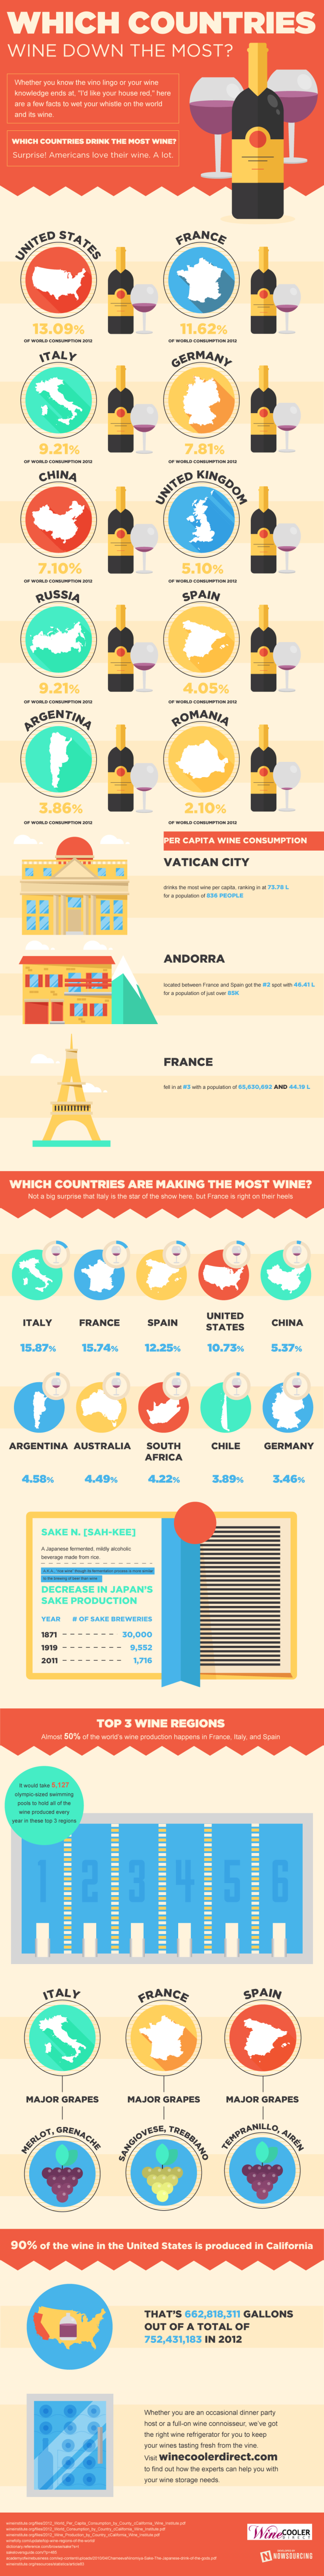 wine_consumption_infographic